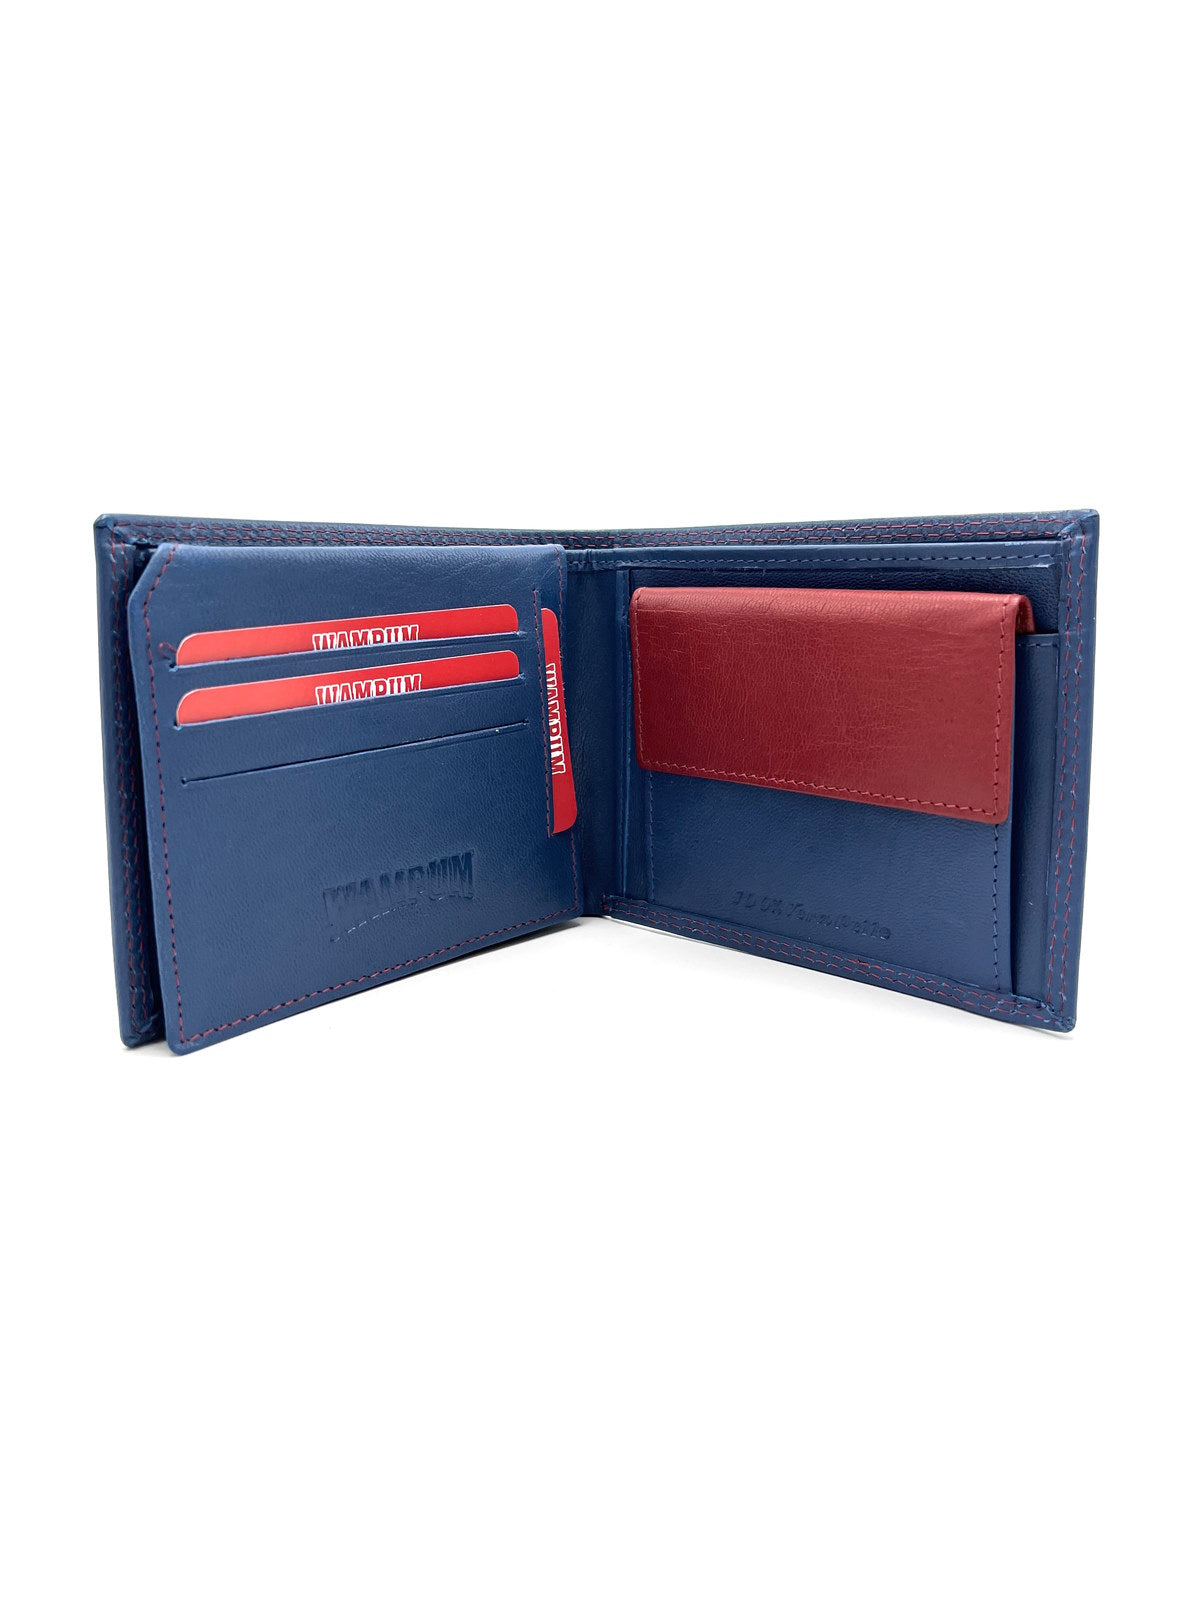 Brand Wampum, Genuine leather wallet, for men, art. PDK256-1.425